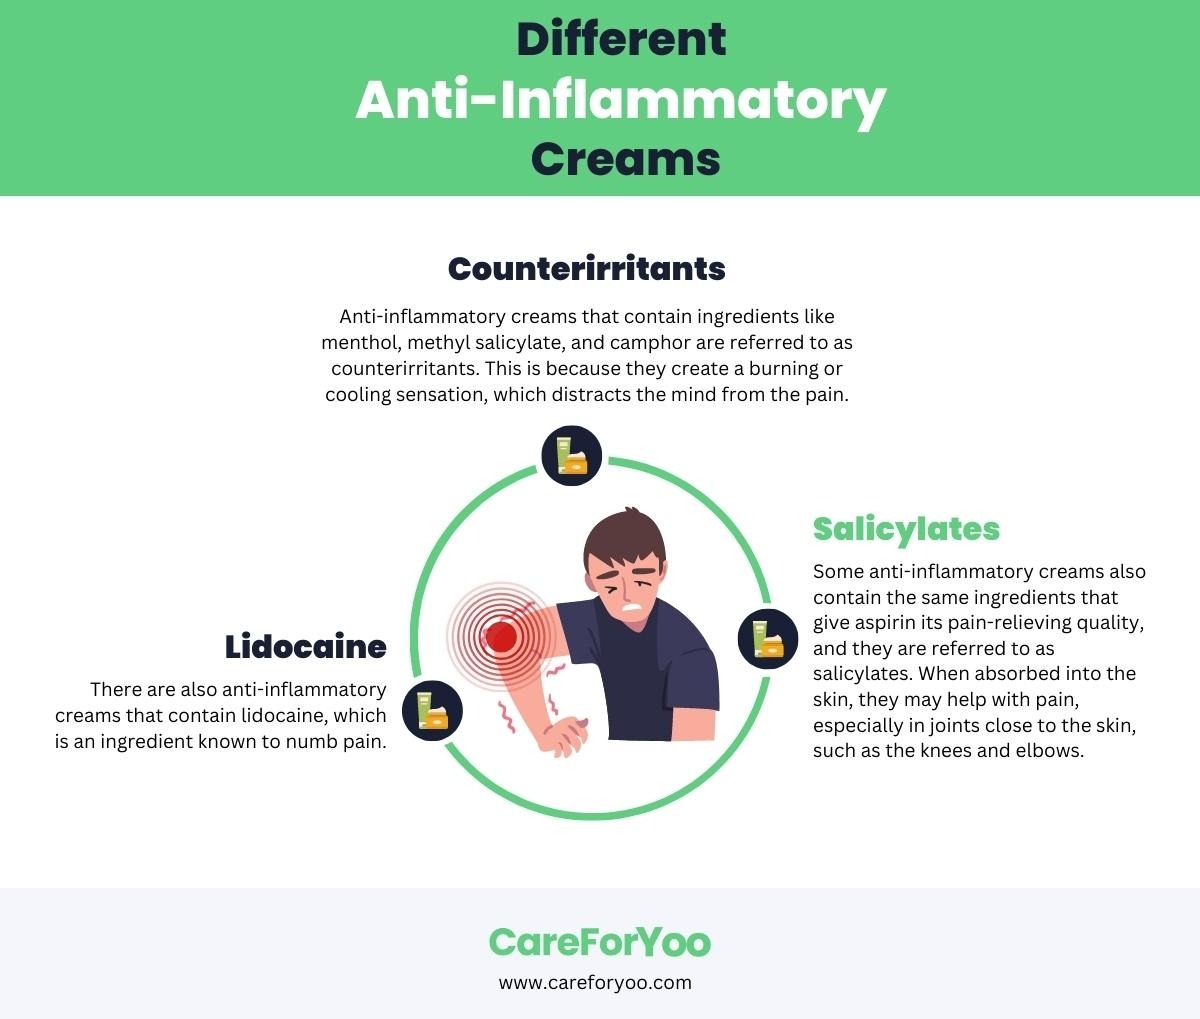 Different Anti-Inflammatory Creams